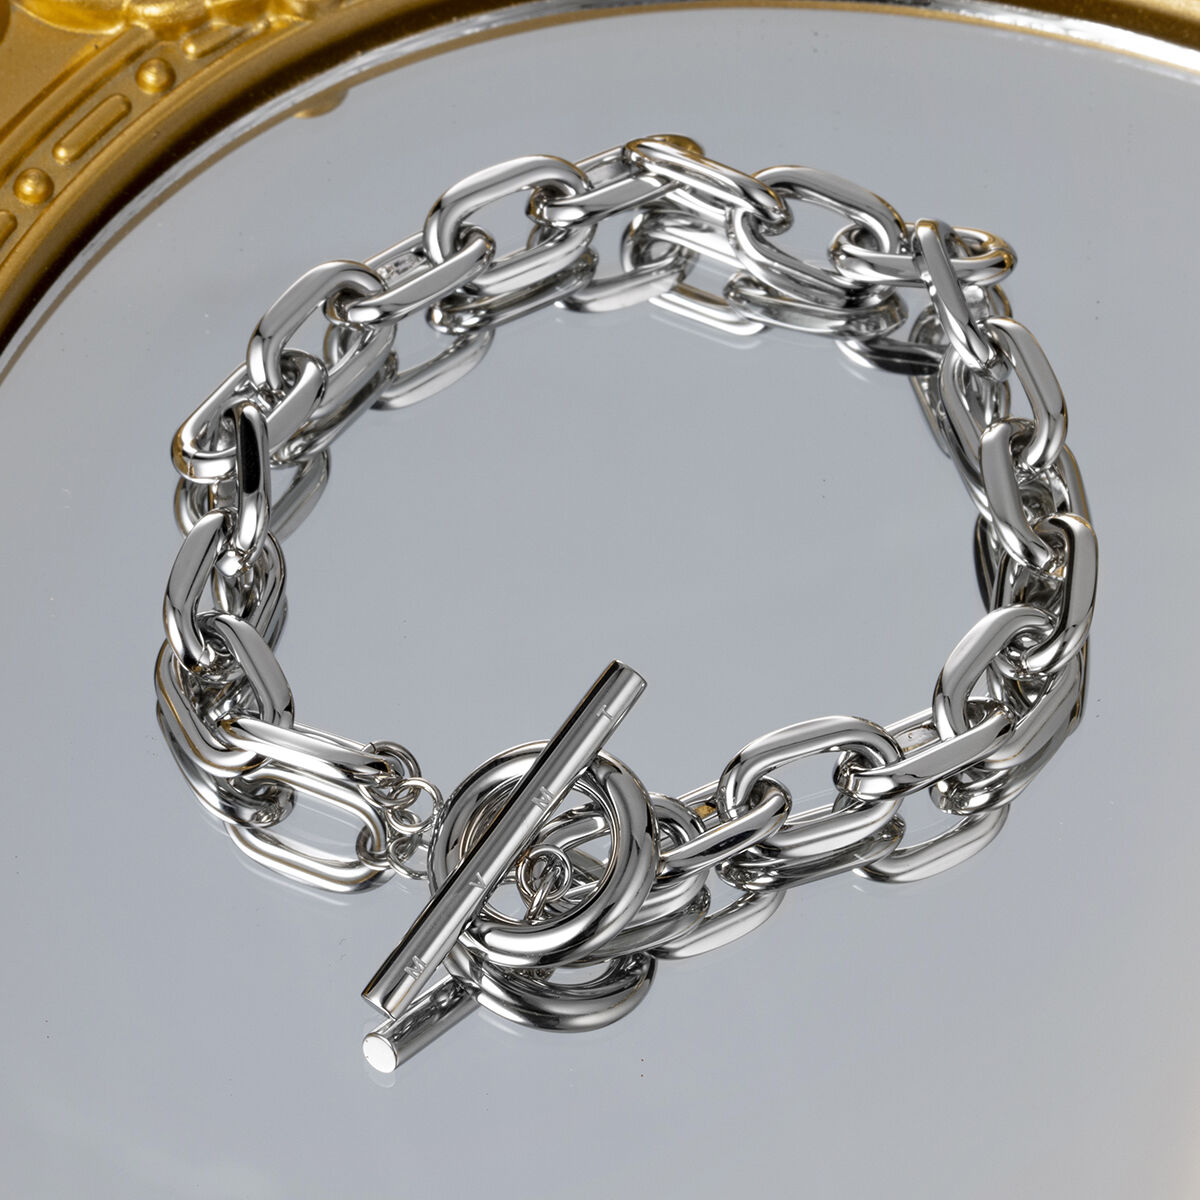 Chunky Cable Bracelet — Women's Chain Bracelet | MVMT